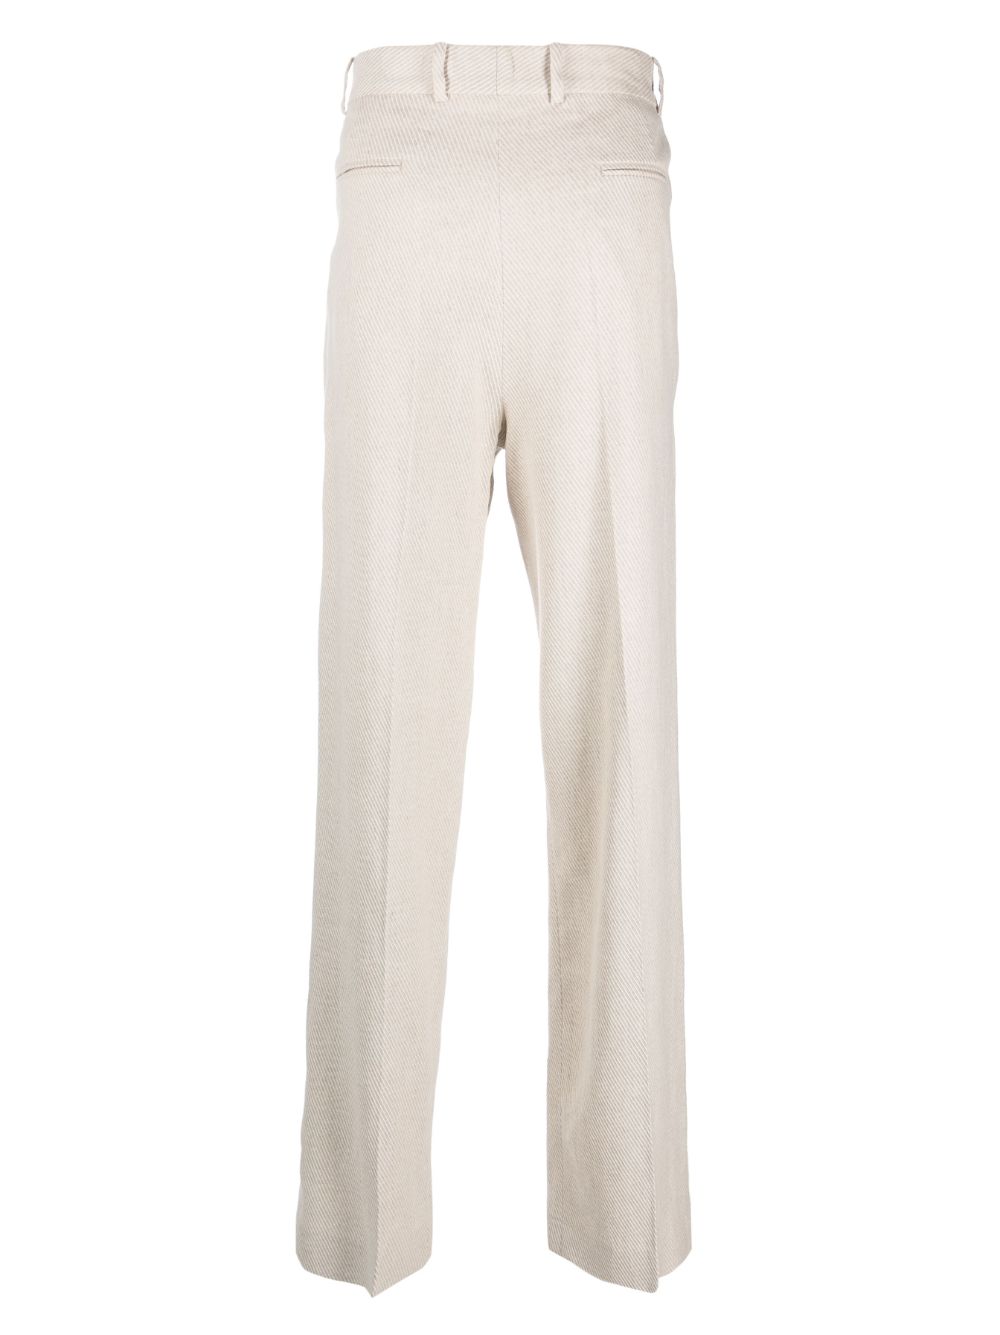 Ceder Brown Elastic Waist Trousers  Brown Cotton Pants  Uathayam